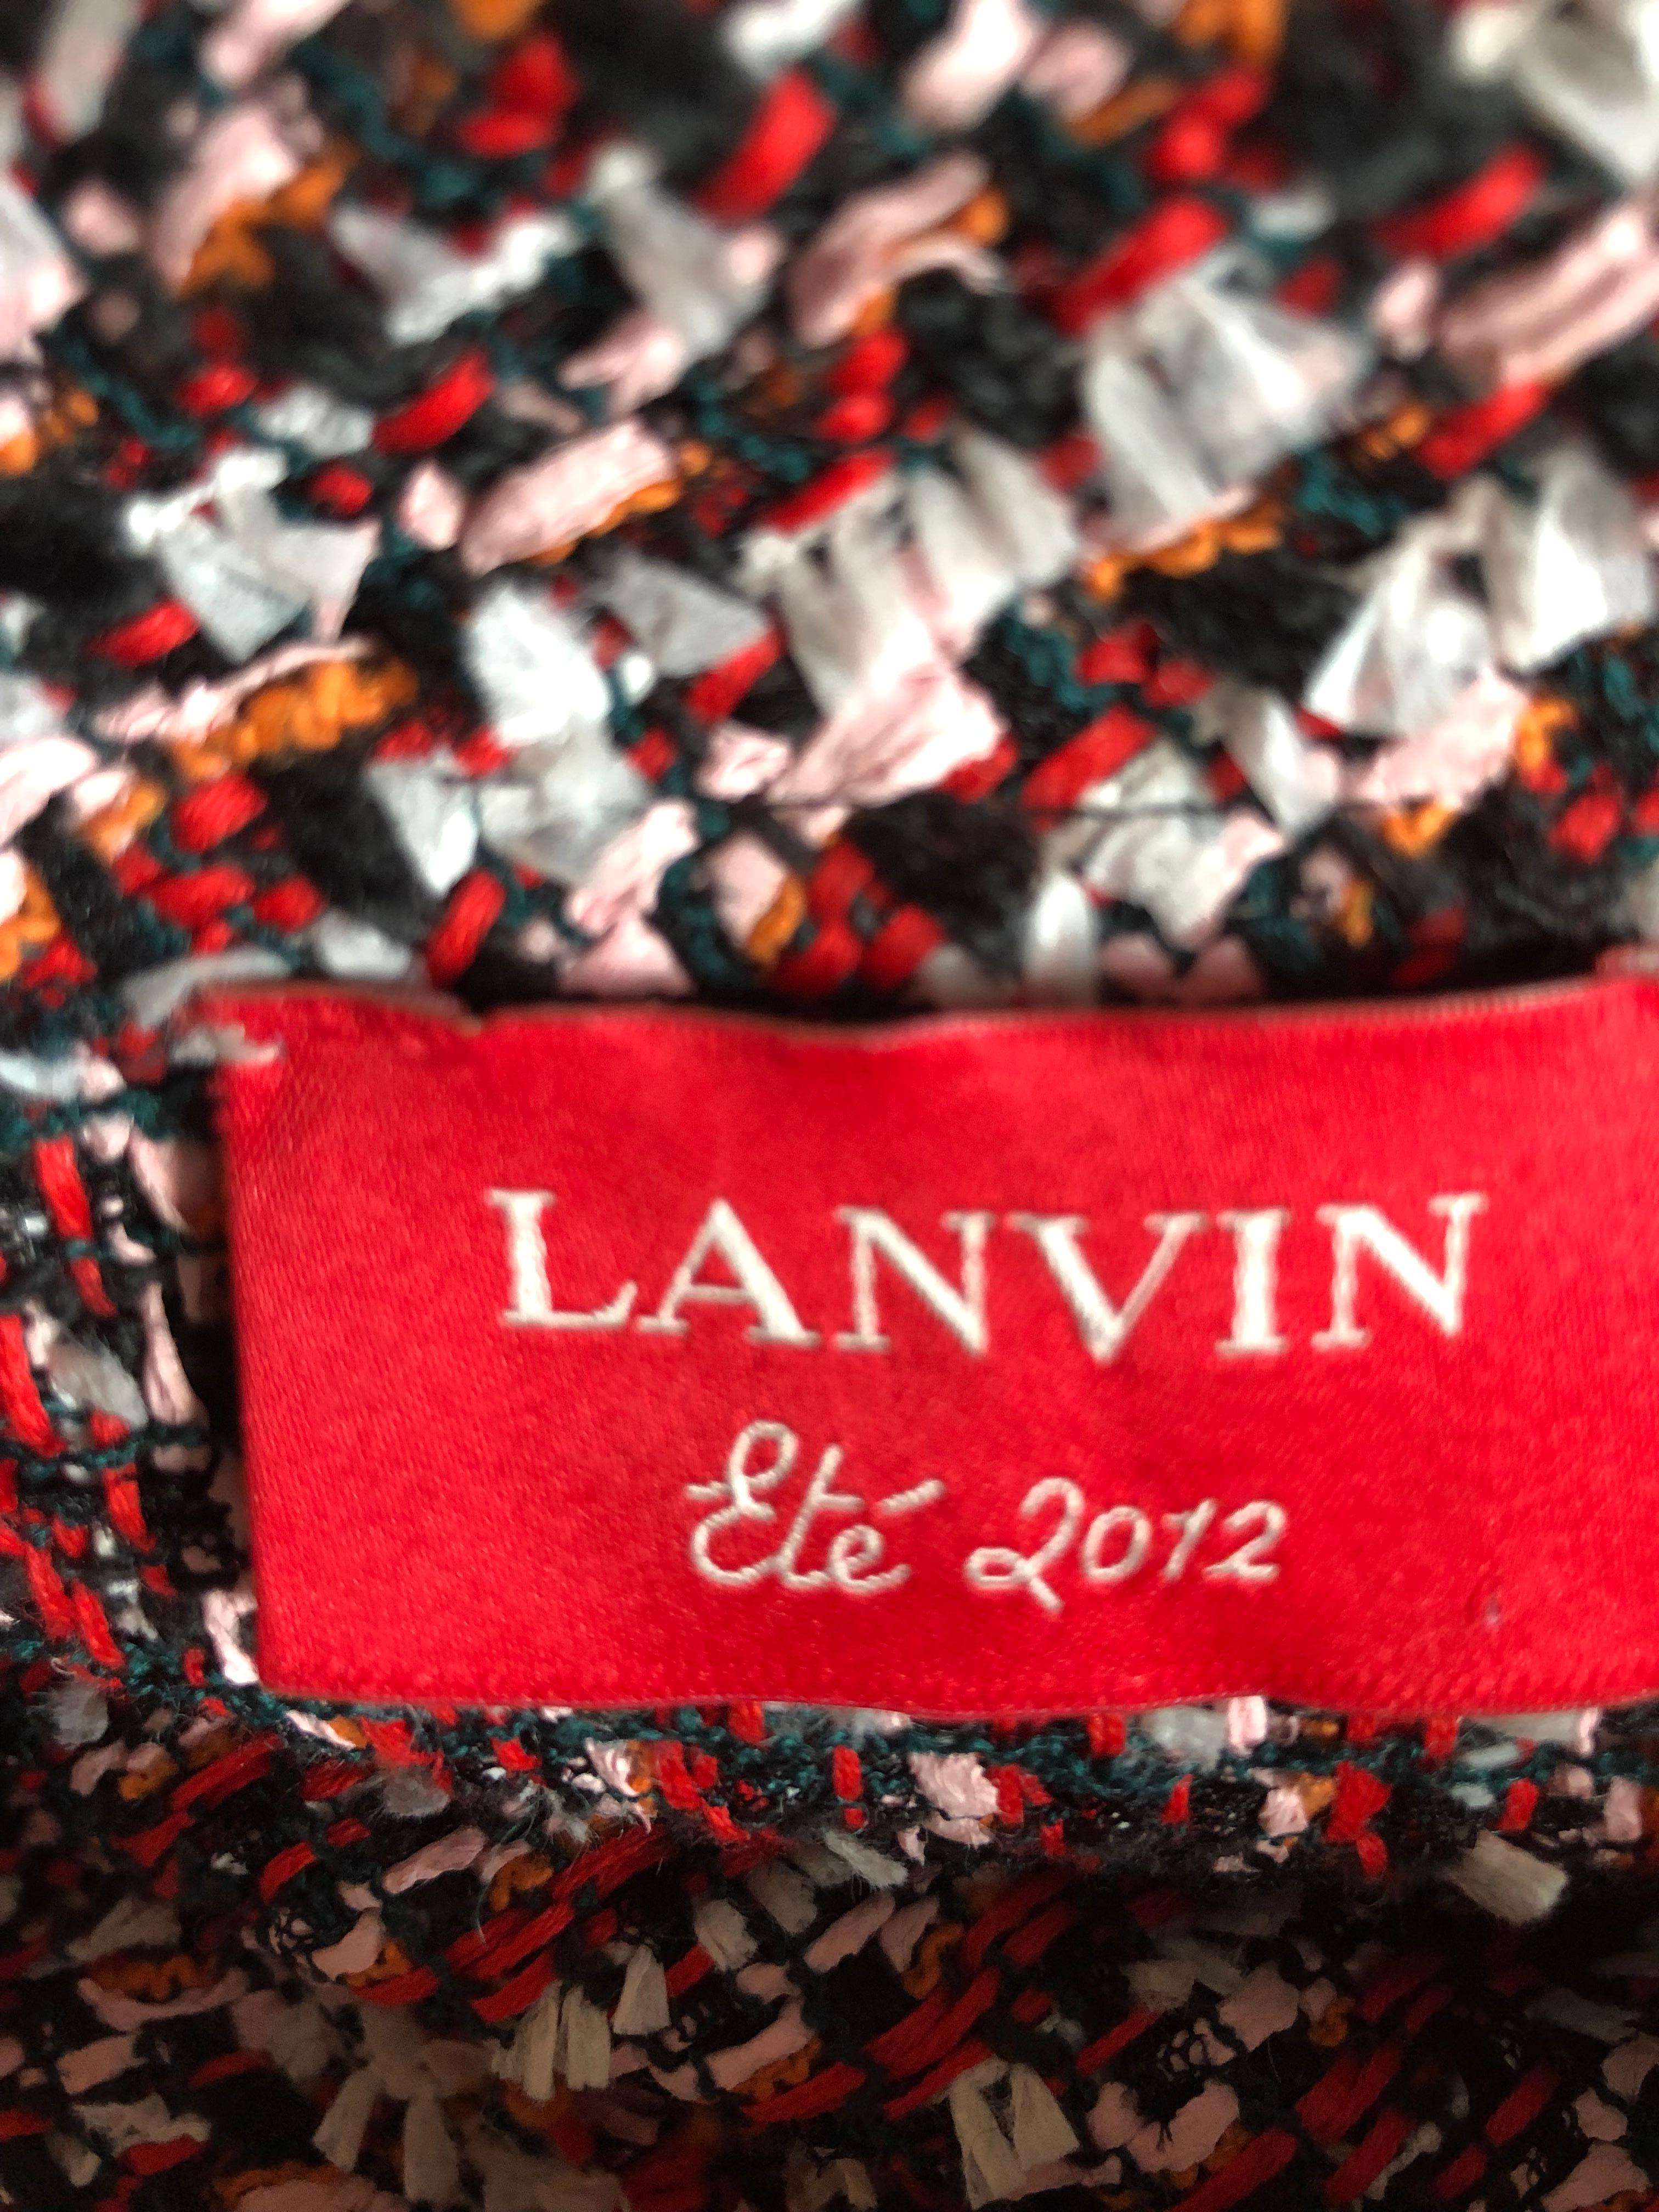 Lanvin Ete 2012 Boucle Tweed Dress by Alber Elbaz 38 Fr 2